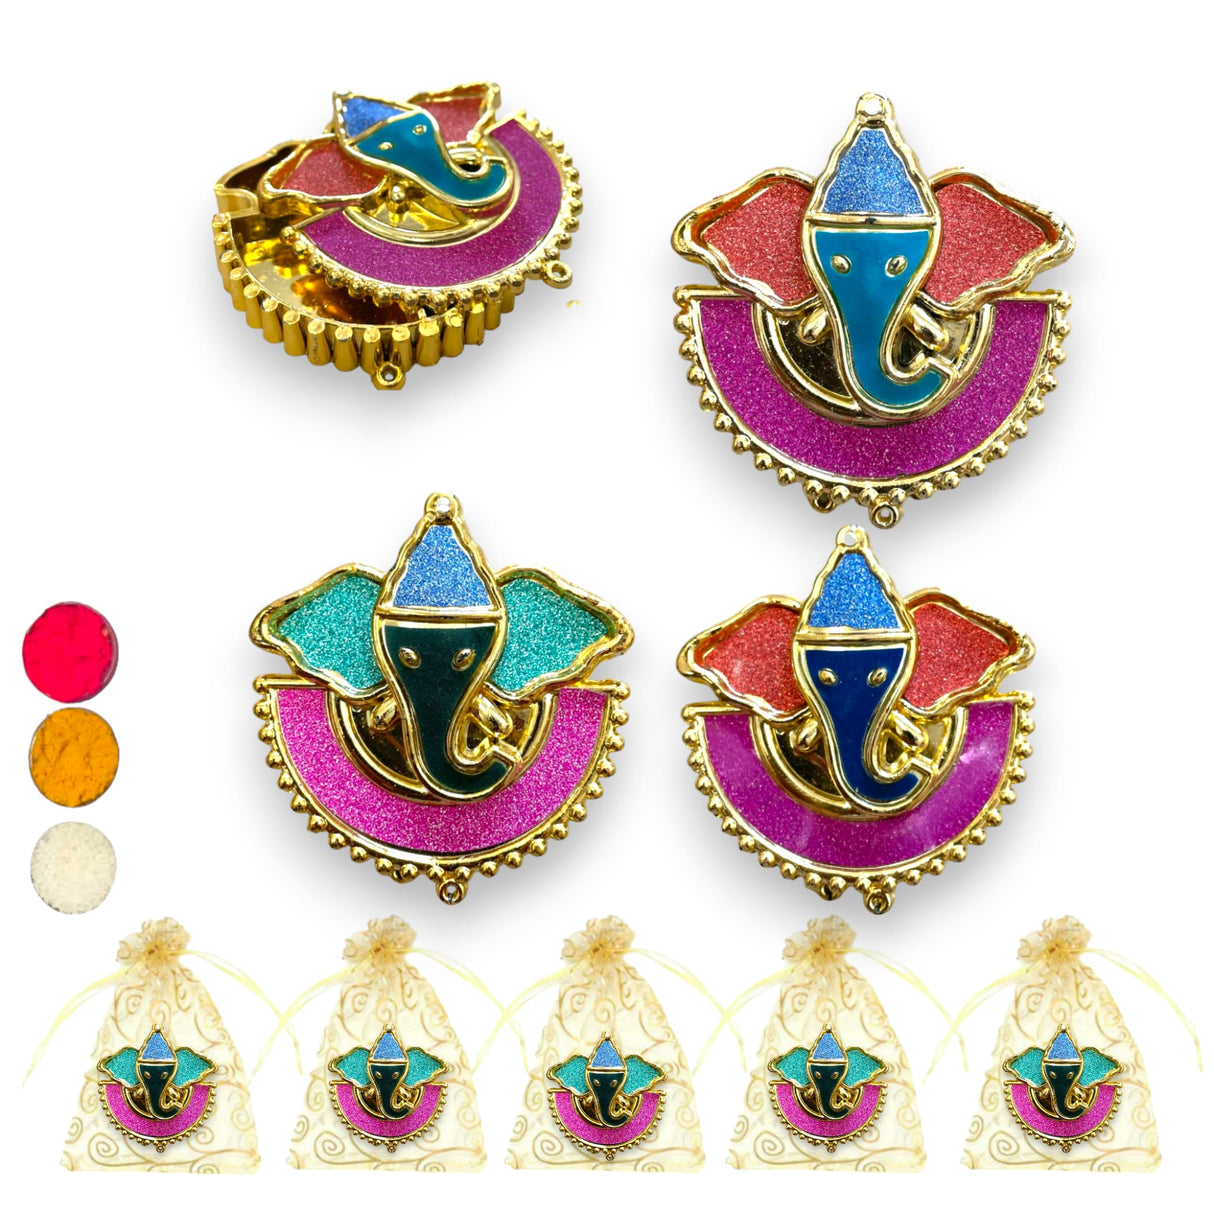 5 pieces decorative ganesha haldi kumkum holder roli